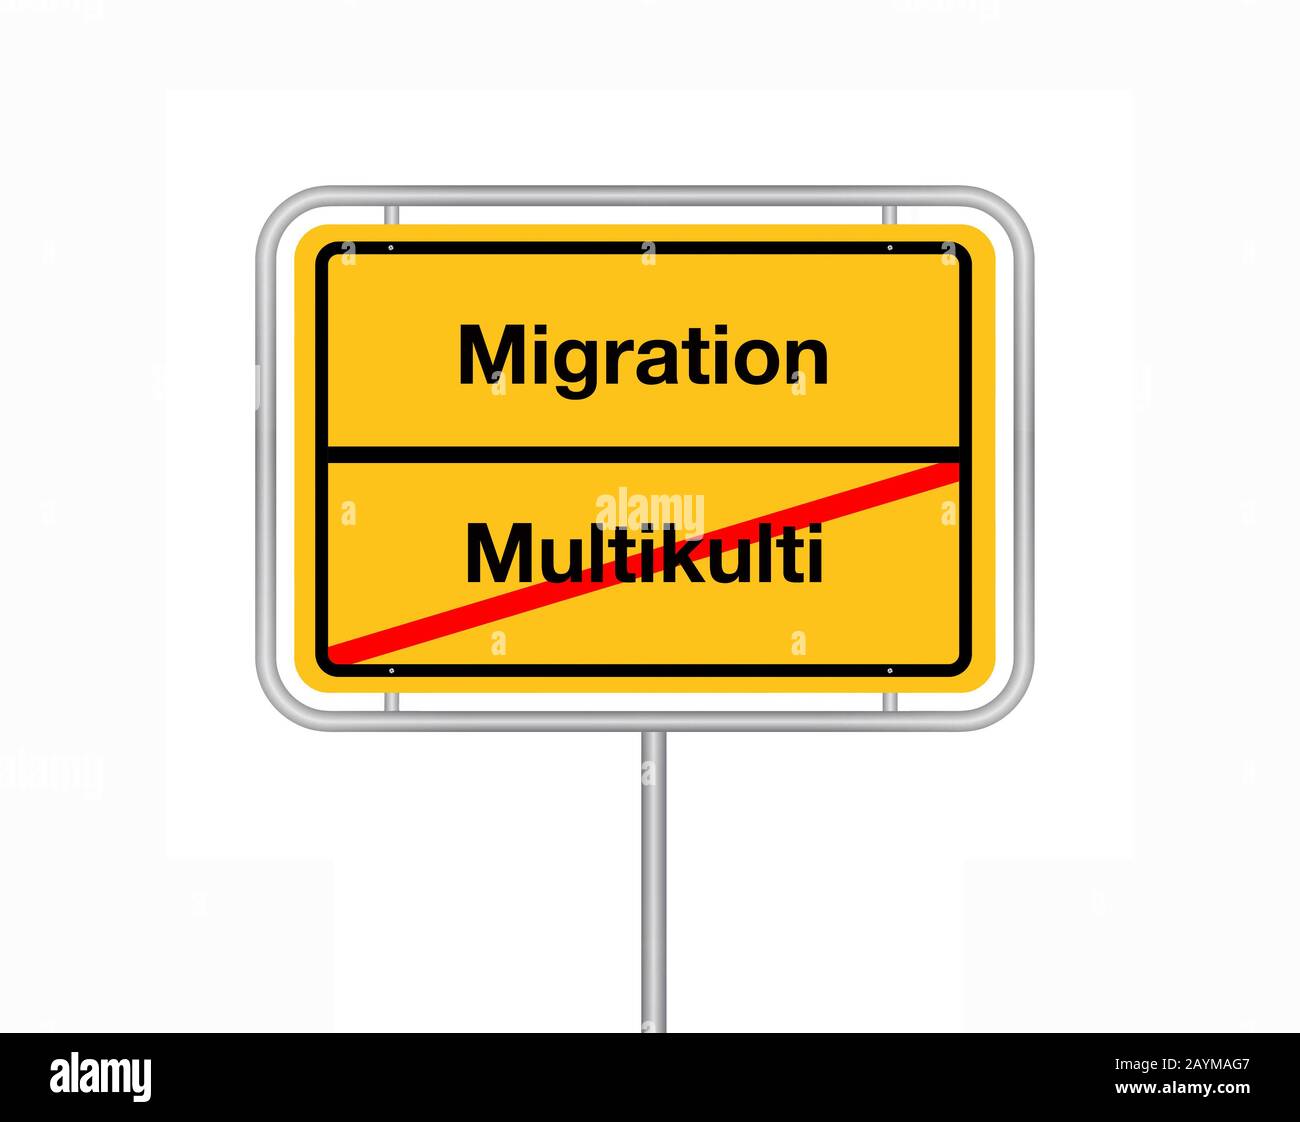 city limit sign lettering Multikulti - Migration, multiethnic - migration, Germany Stock Photo